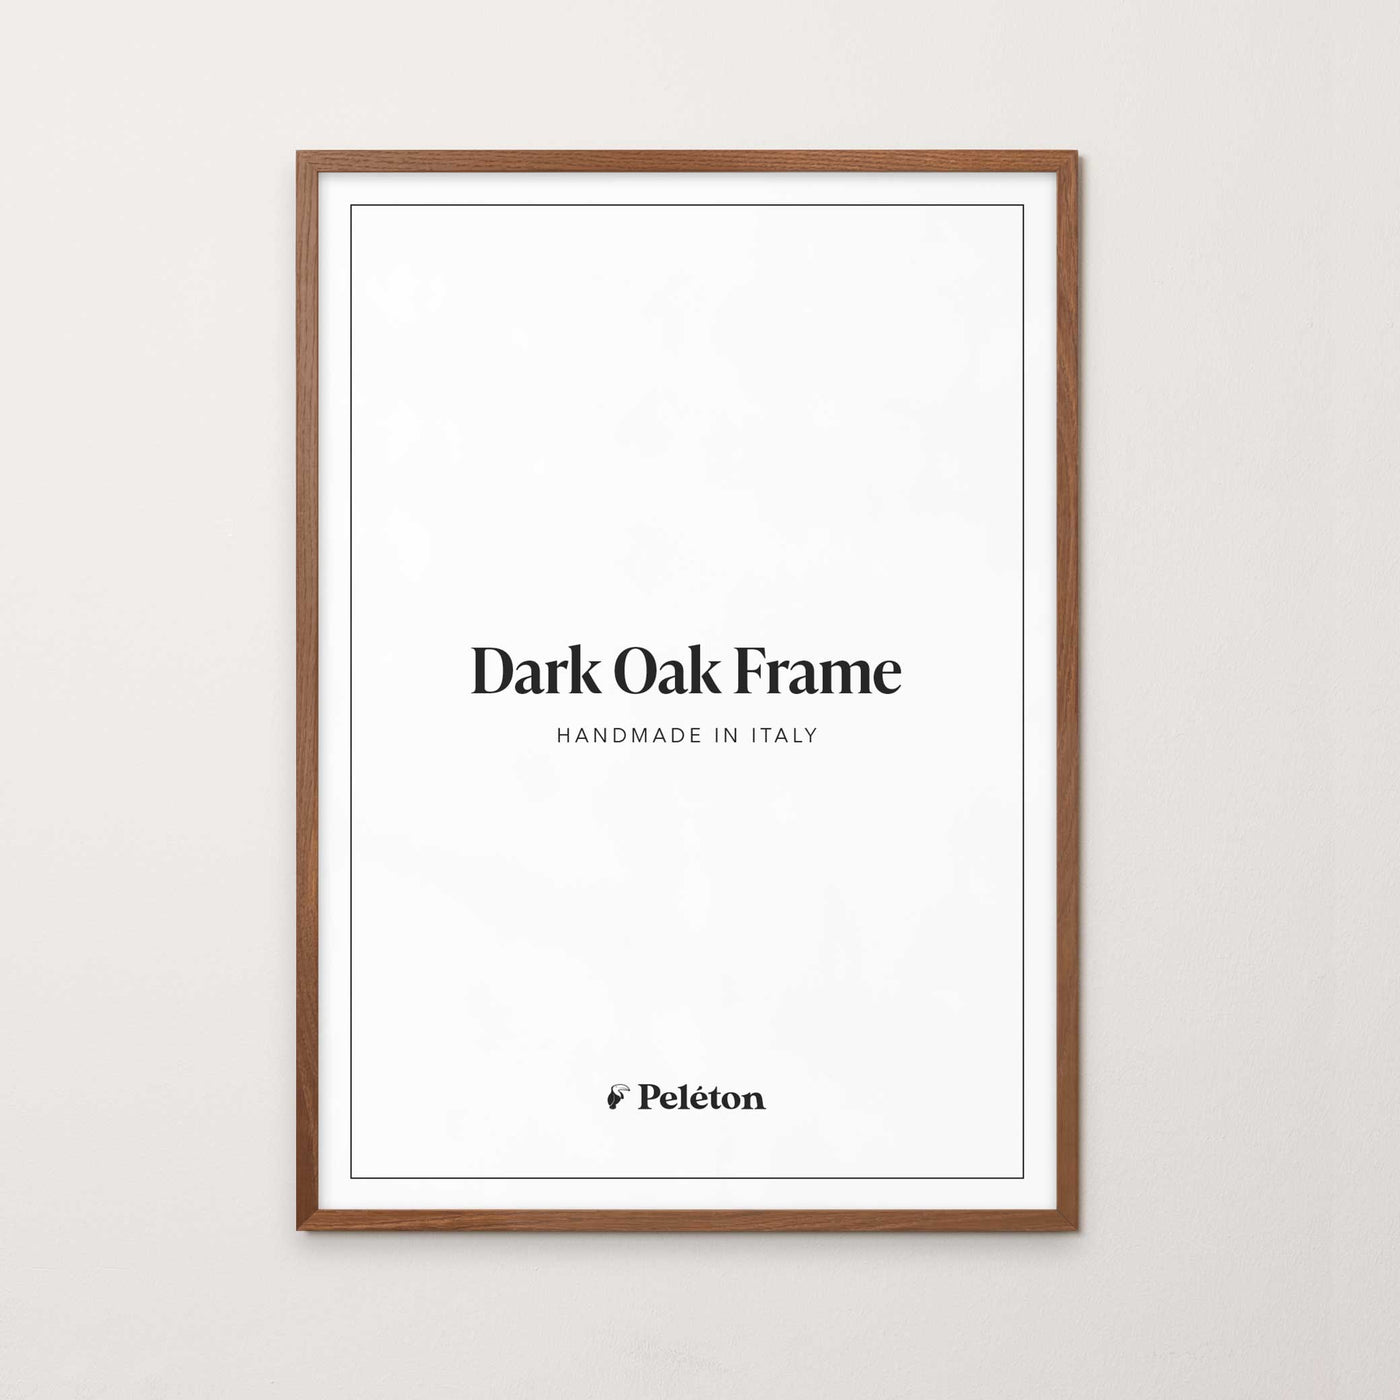 Dark oak frame